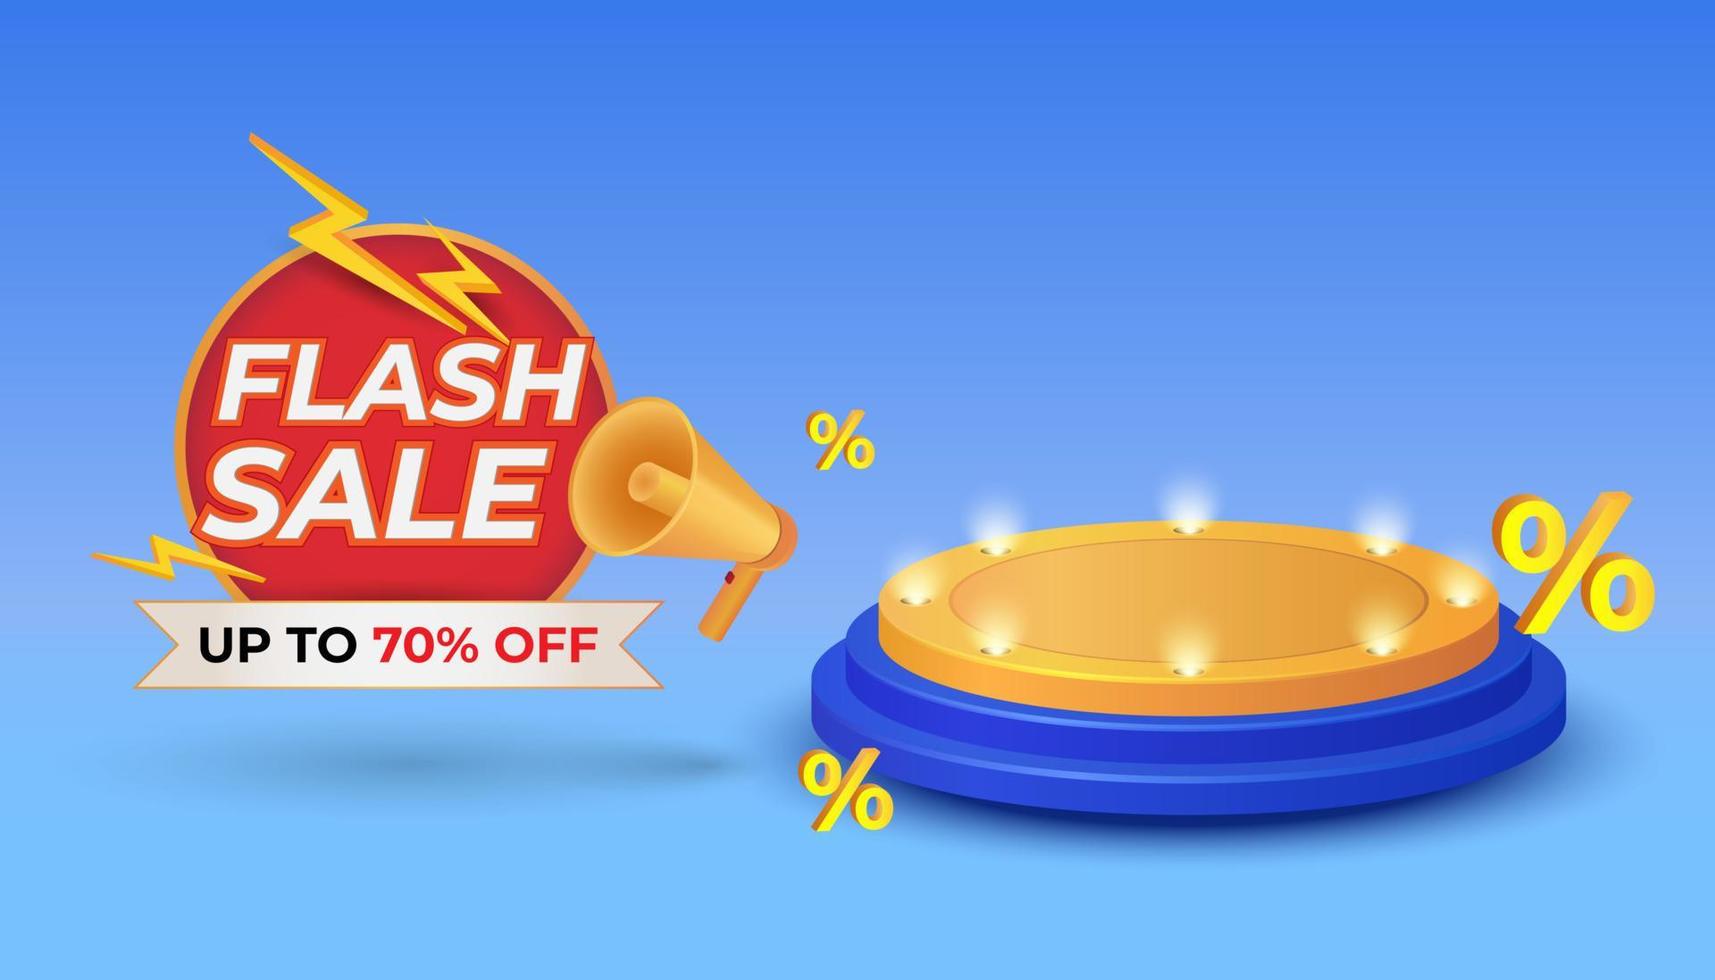 modelo de banner de venda flash para oferta especial com pódio vetor